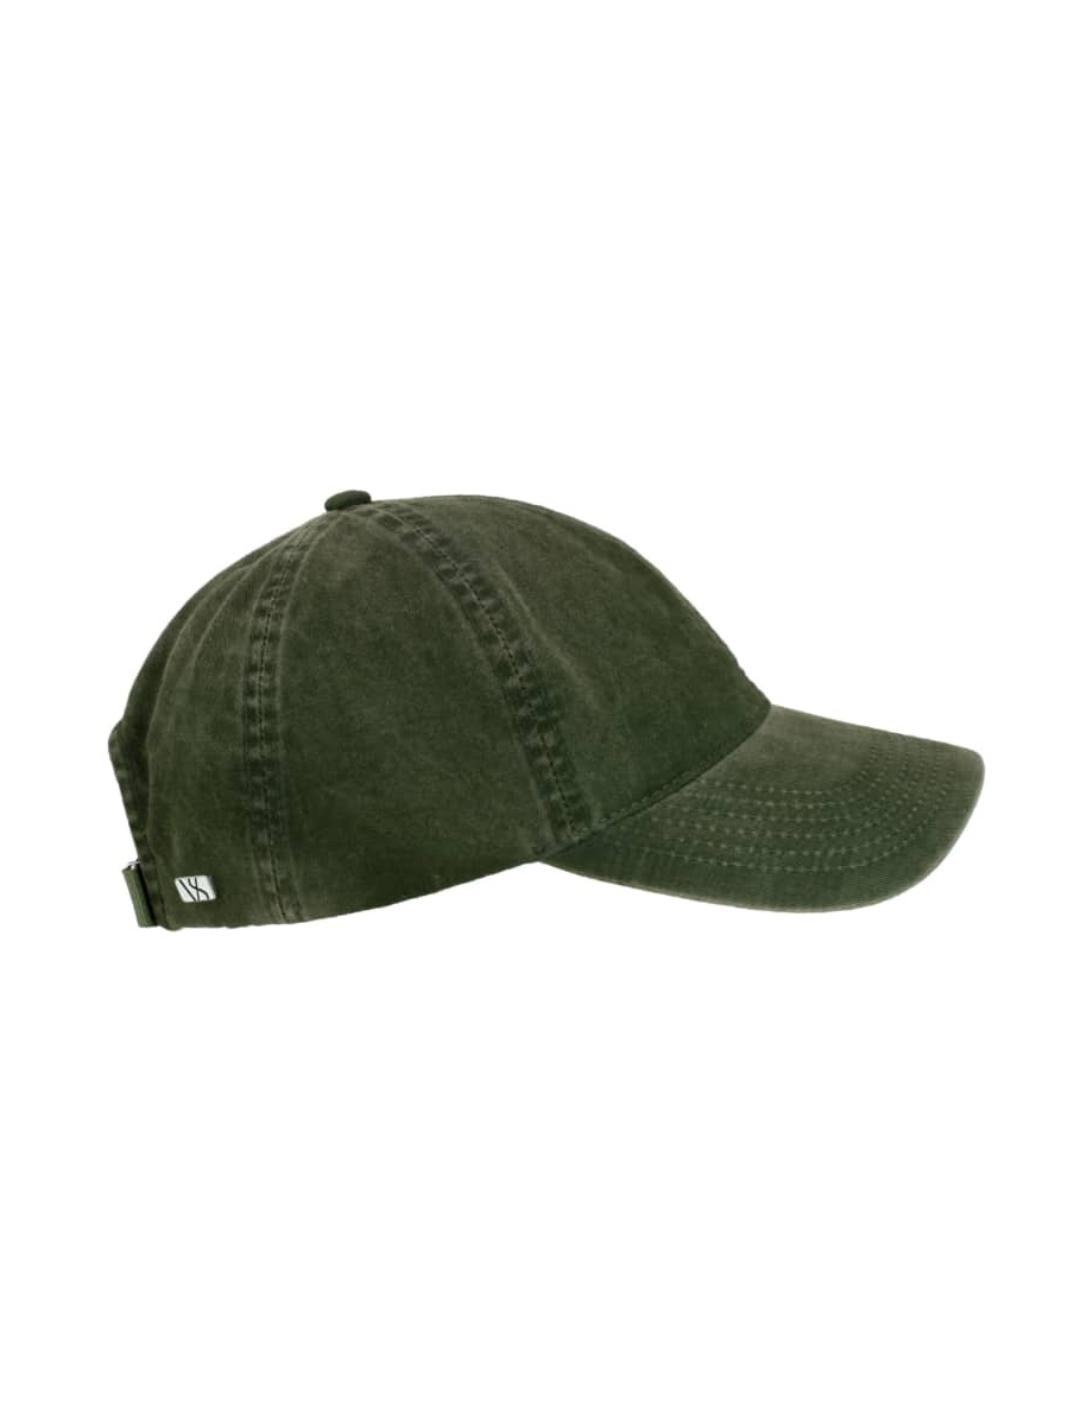 Varsity Headwear Accessories Cap | Green Washed Cotton